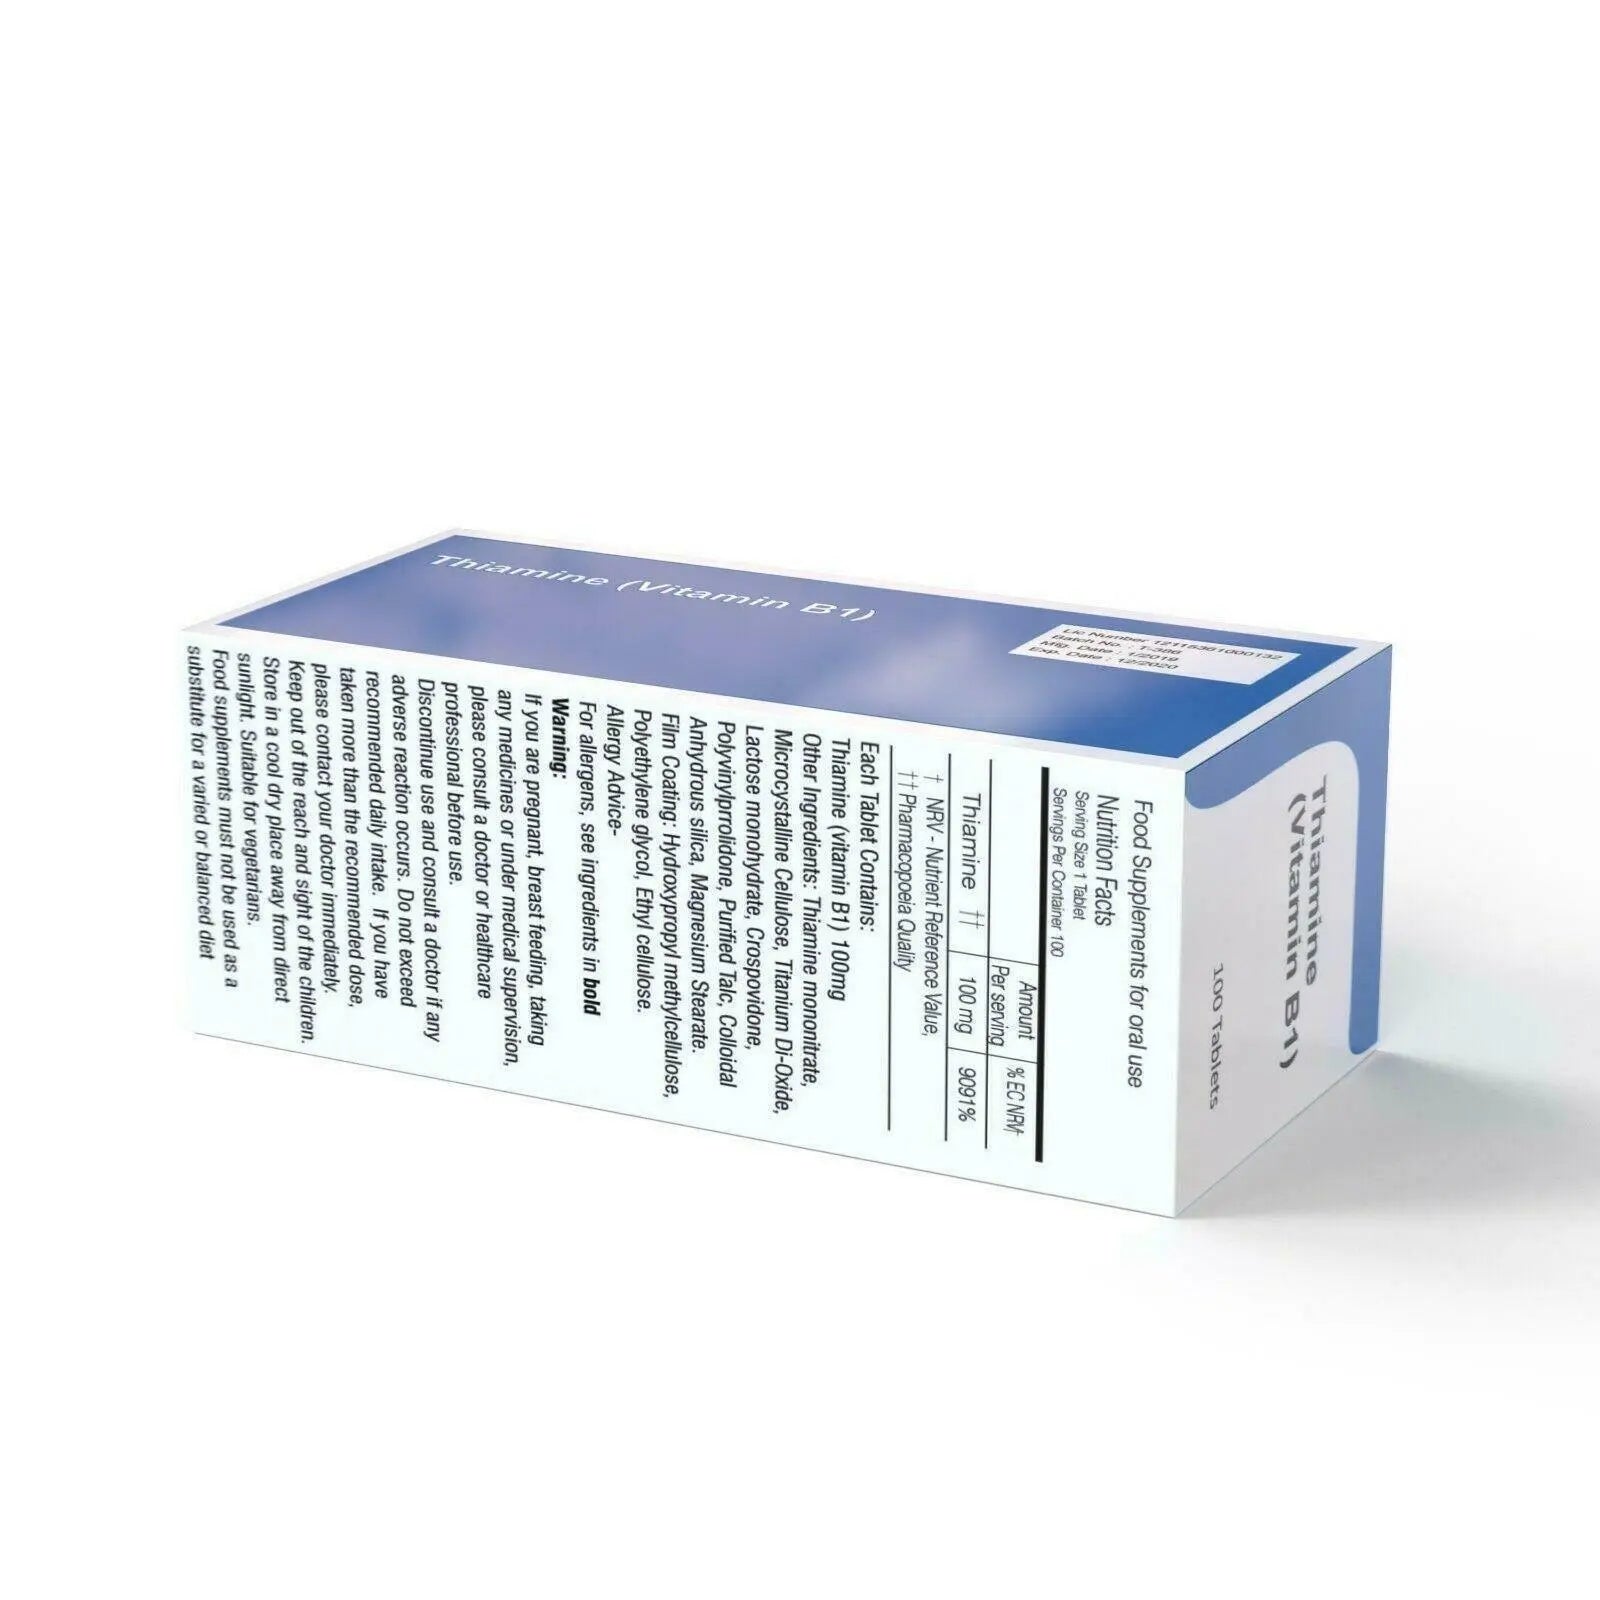 SIPCO Vitamin B1 100mg Thiamine 100 Tablets VEGETARIAN - Arc Health Nutrition UK Ltd 